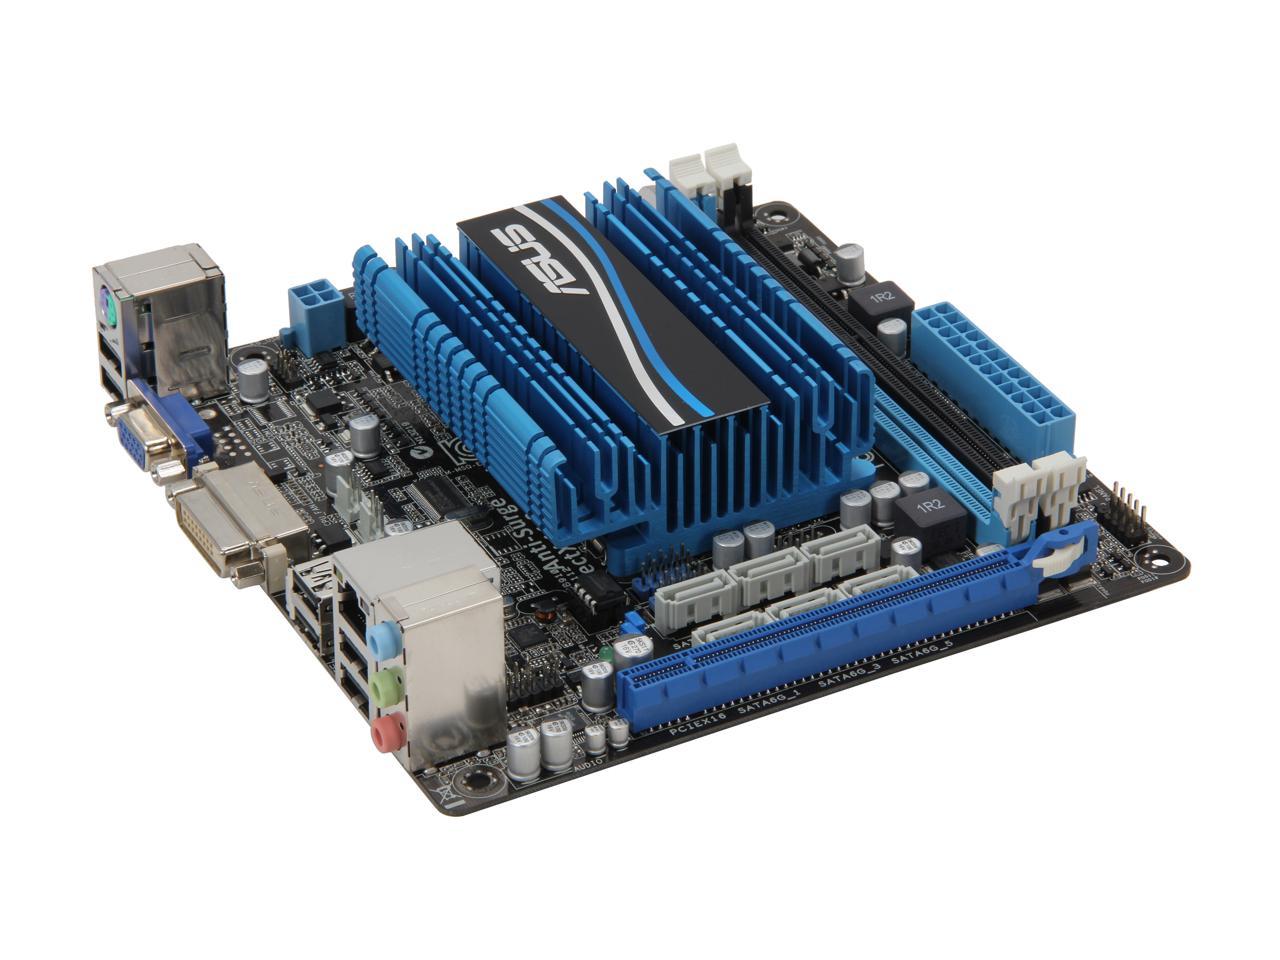 ASUS C60M1-I AMD Fusion APU C-60 (1.0 GHz, dual core) Mini ITX